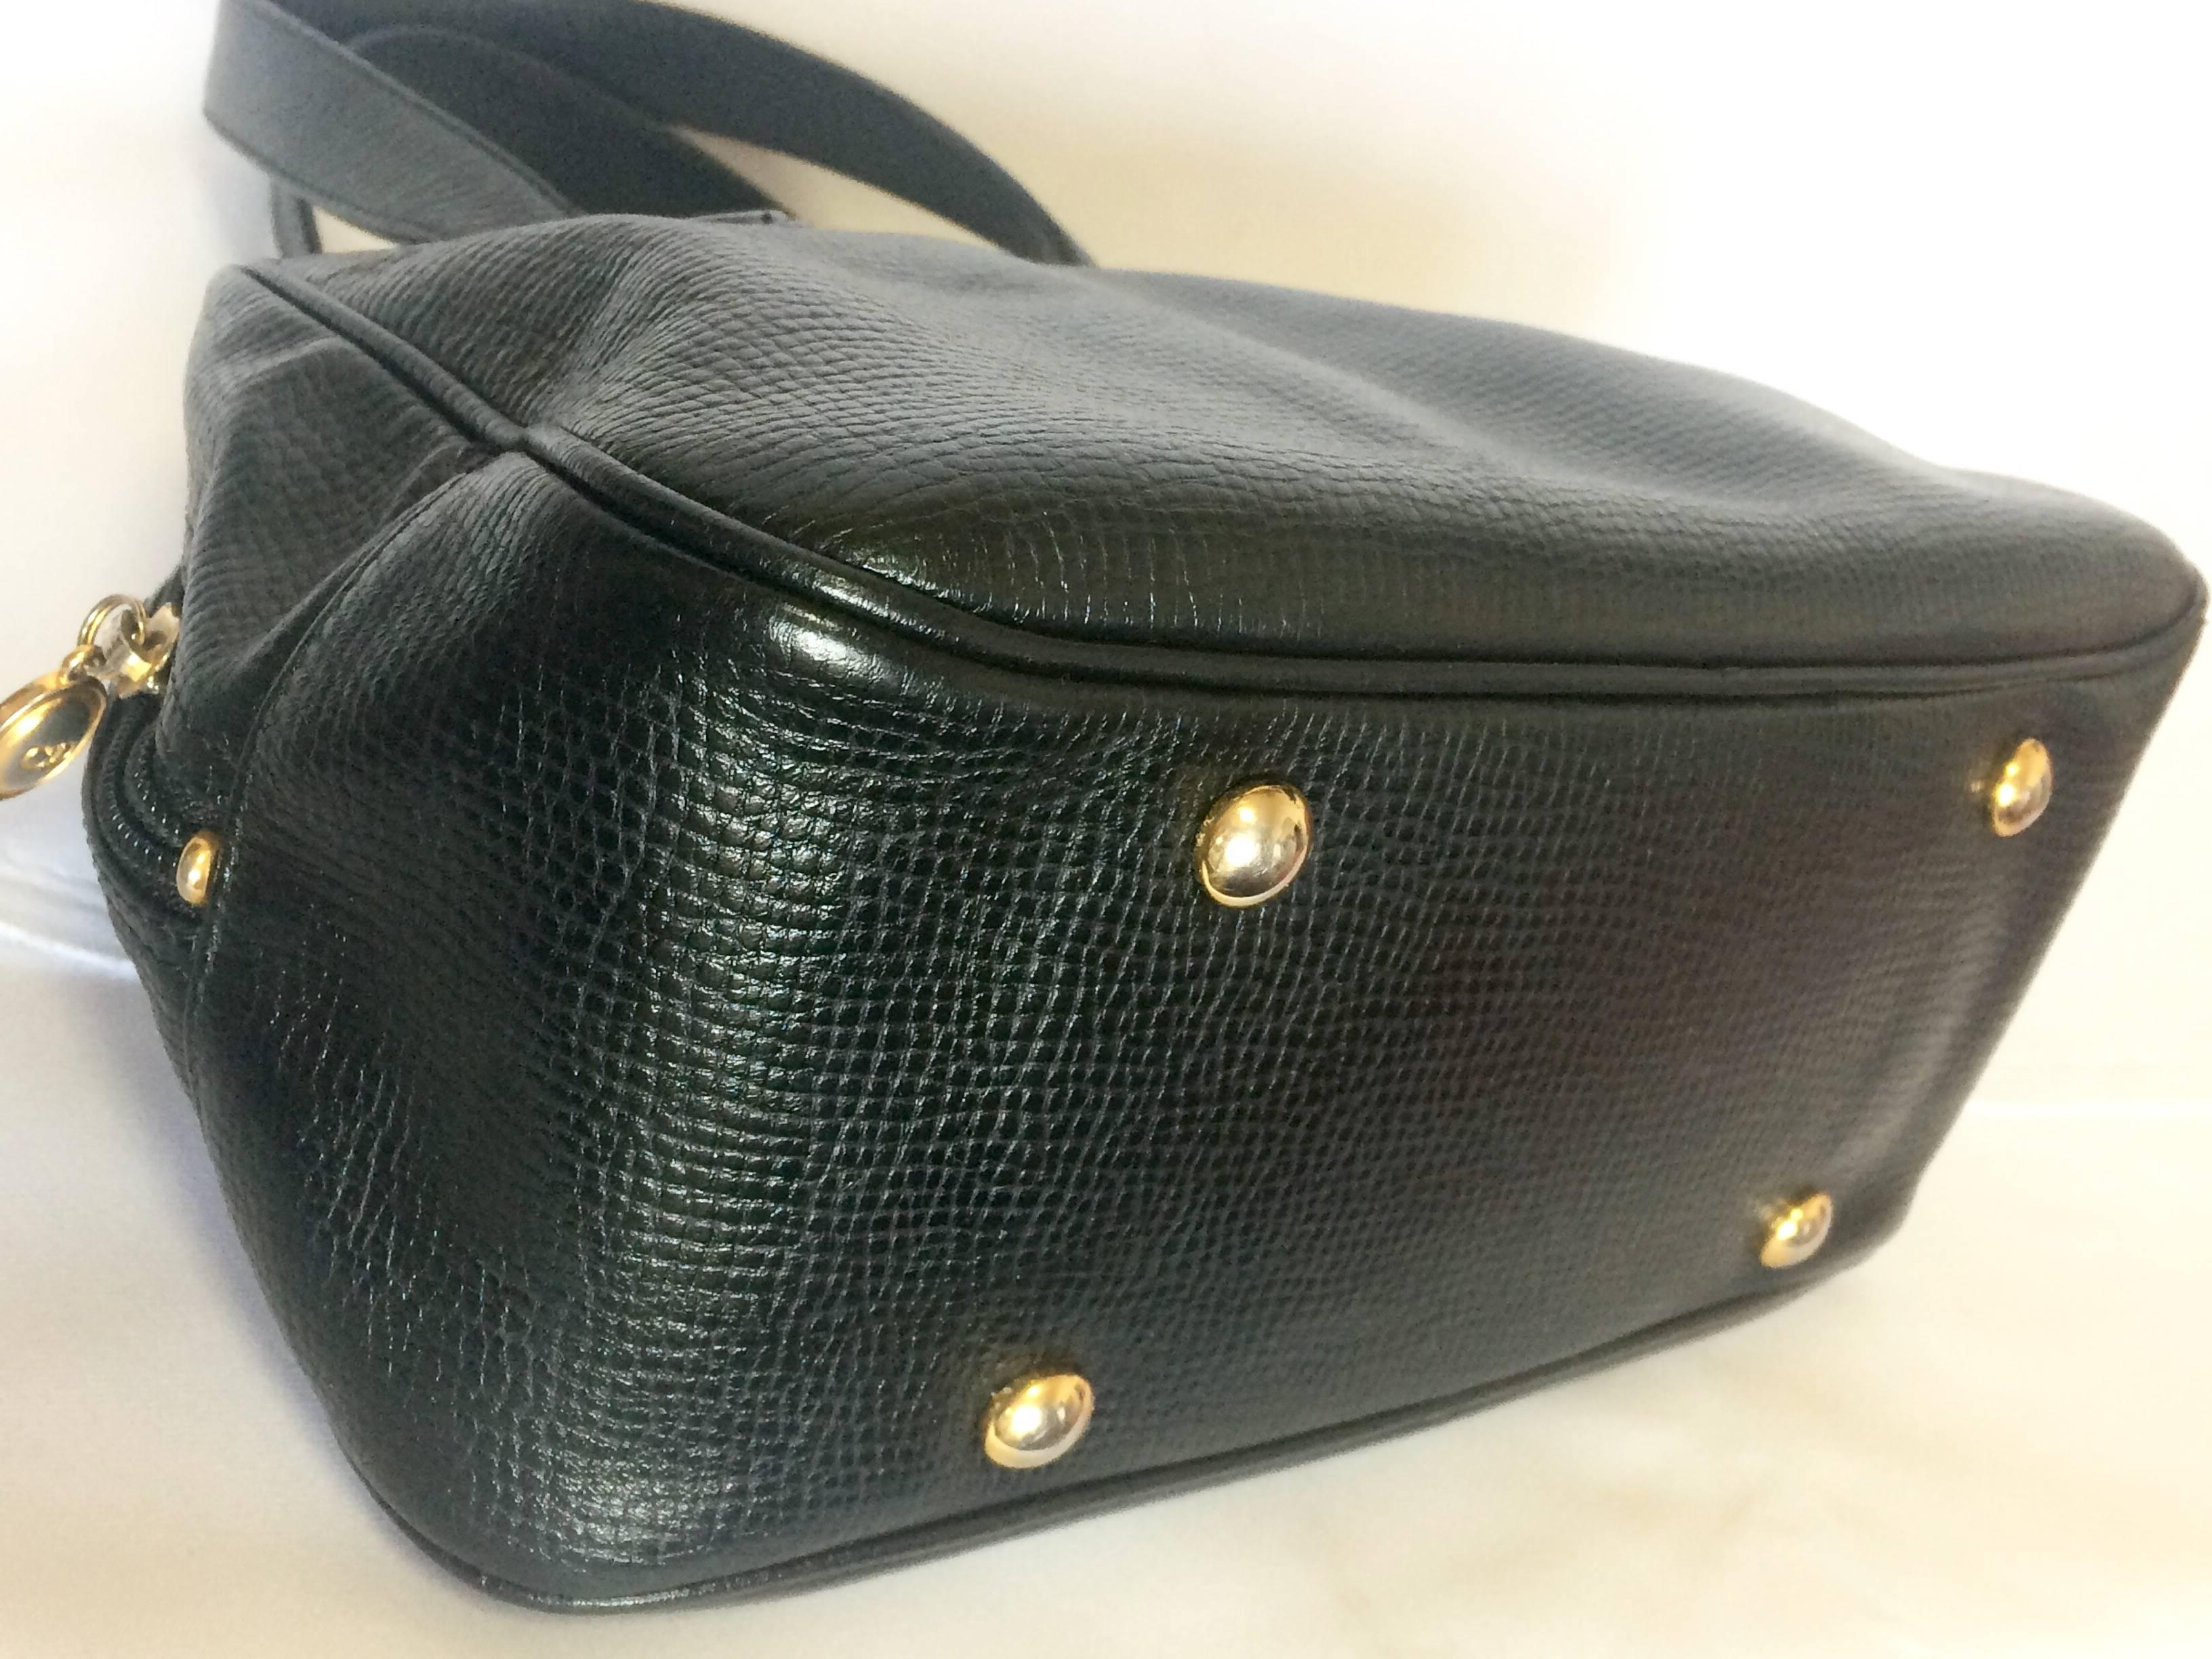 Vintage Christian Dior black leather mini bolide style handbag with logo motif. 1